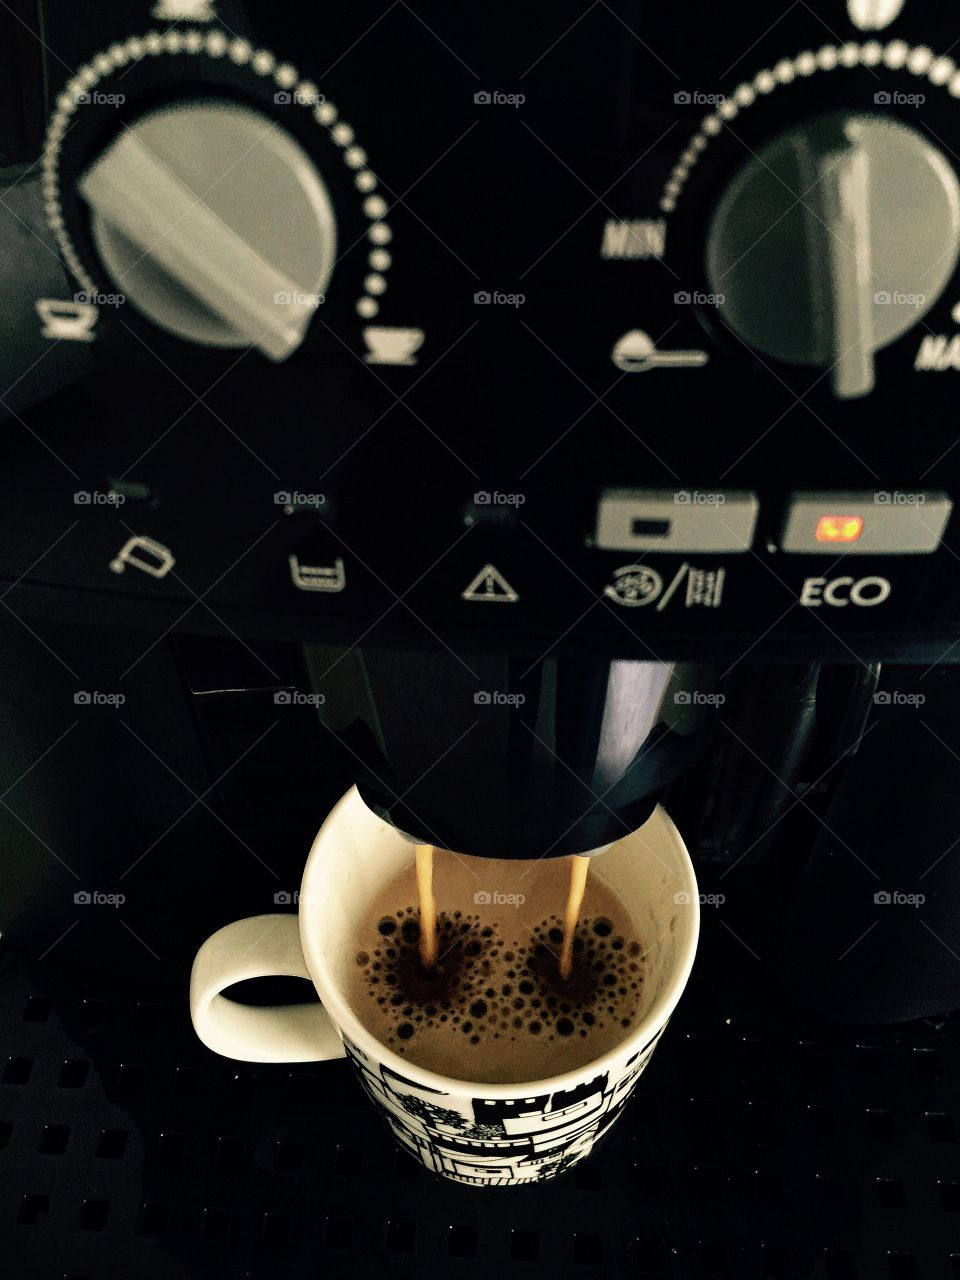 Making coffee. Closeup image of coffee machine brewing coffee